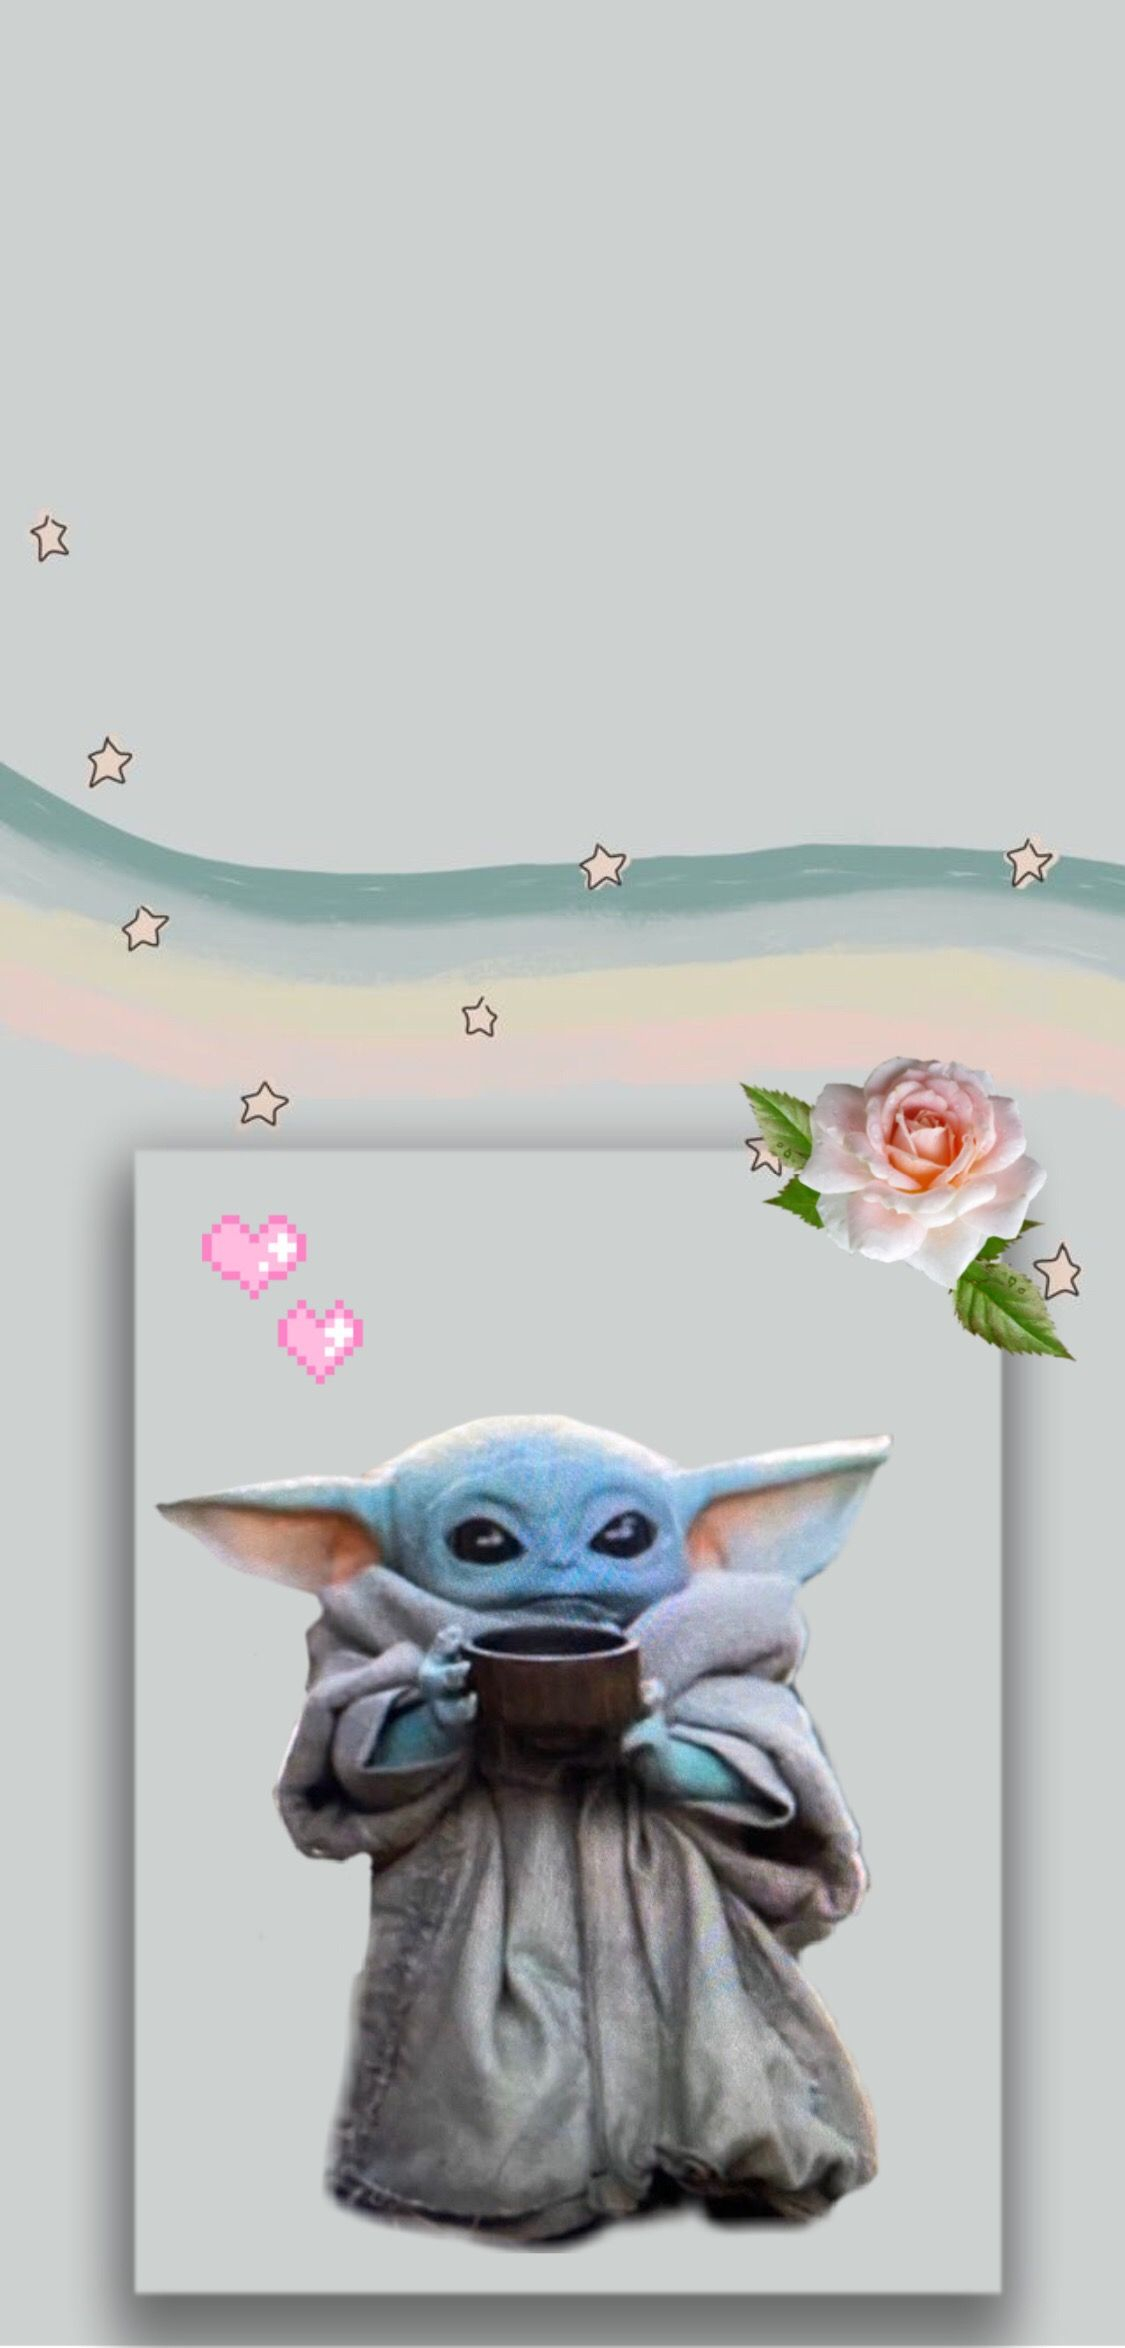 1125x2348 Baby yoda | Yoda wallpaper, Baby star wars characters, Star wars wallpaper